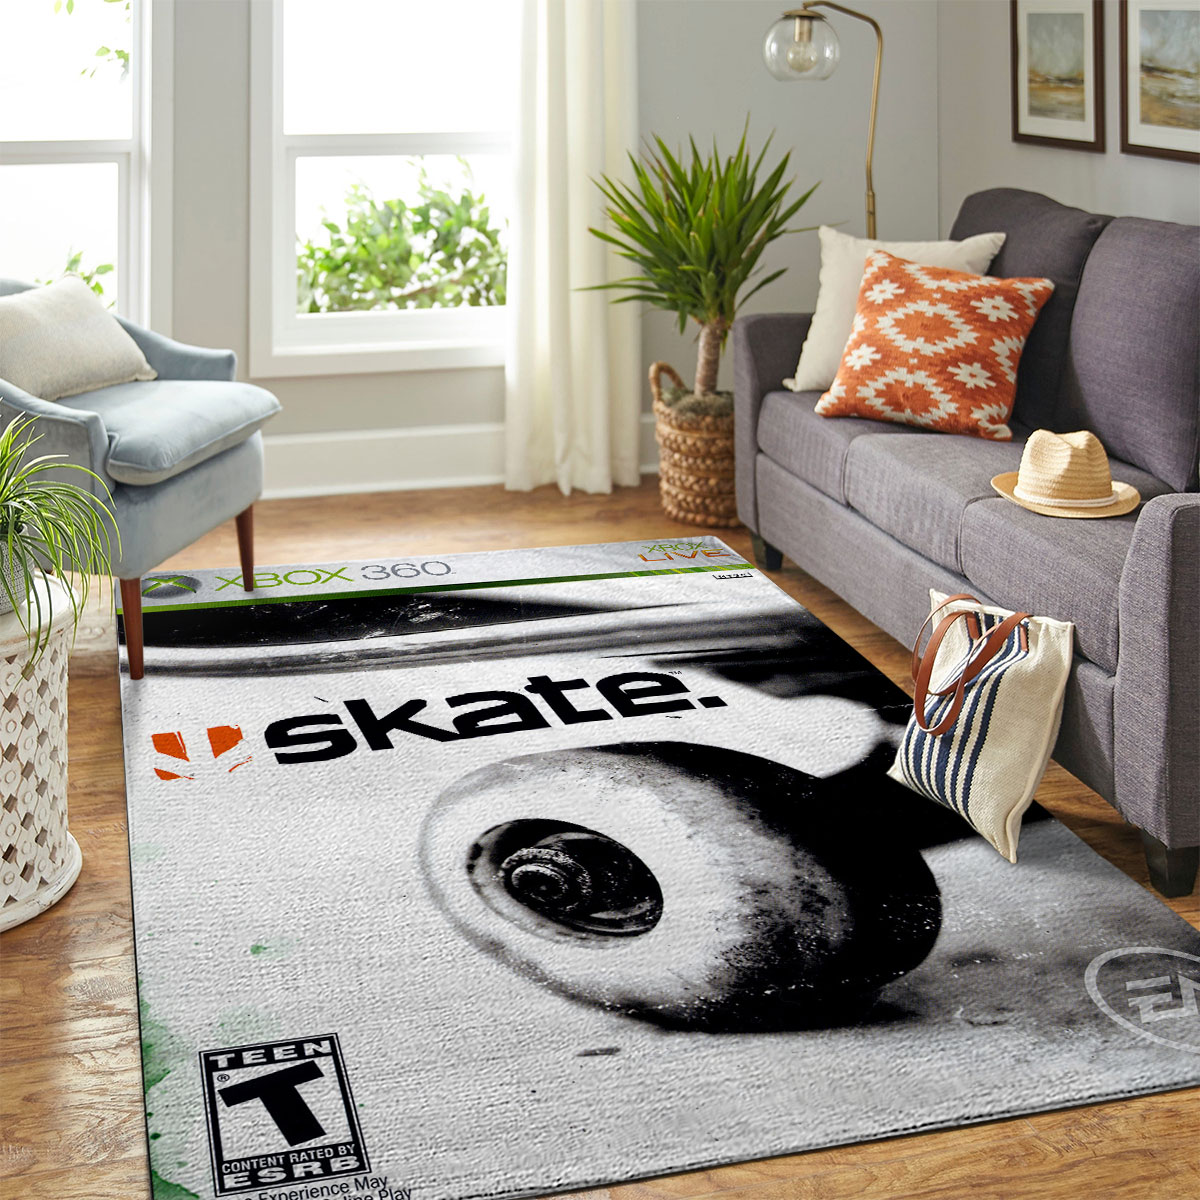 Skate Rug Carpet